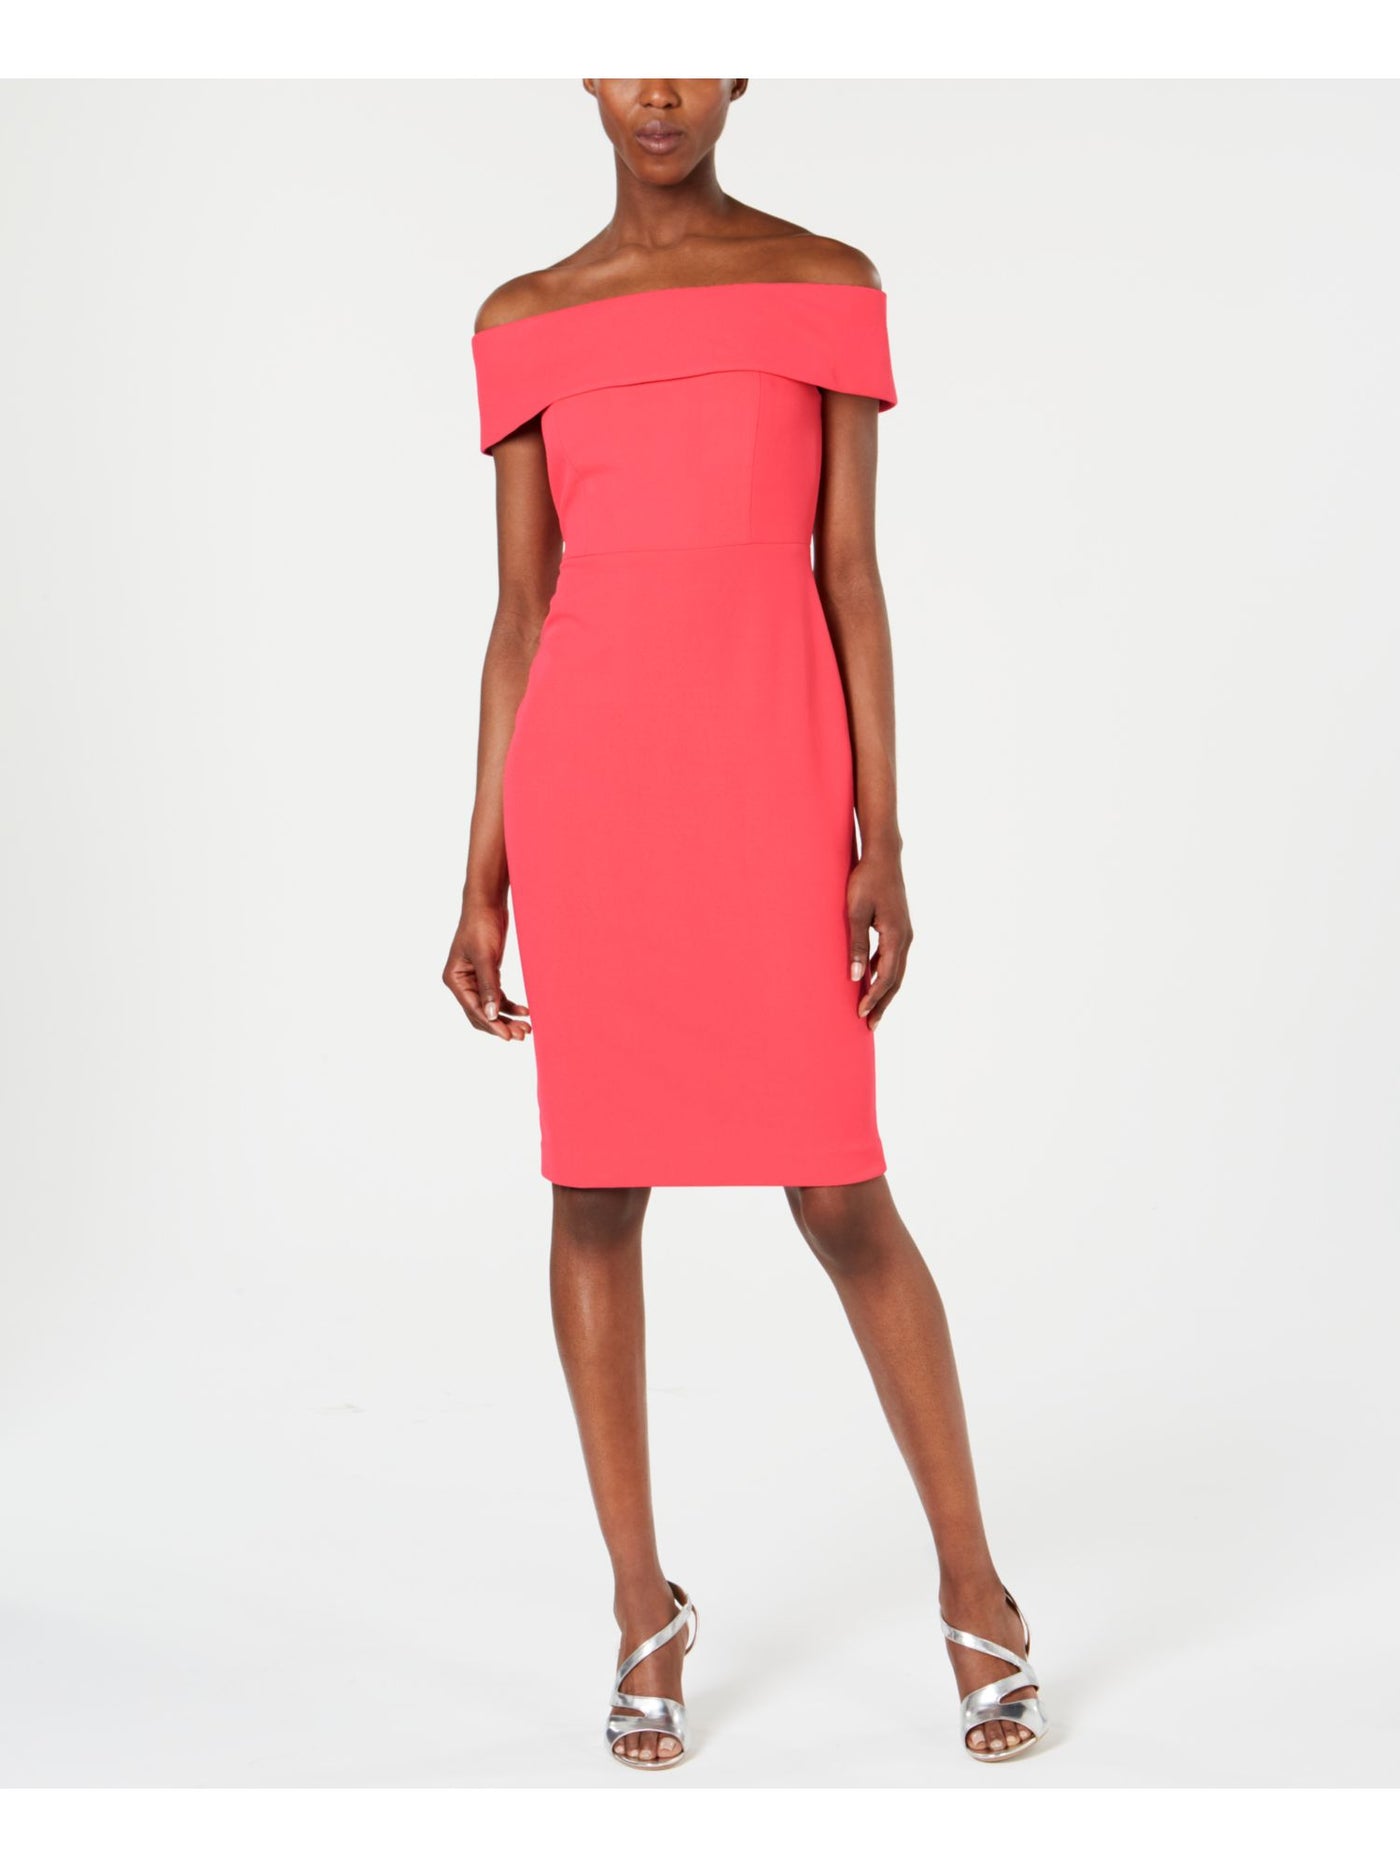 CALVIN KLEIN Womens Pink Zippered Off Shoulder Above The Knee Evening Sheath Dress Petites 8P